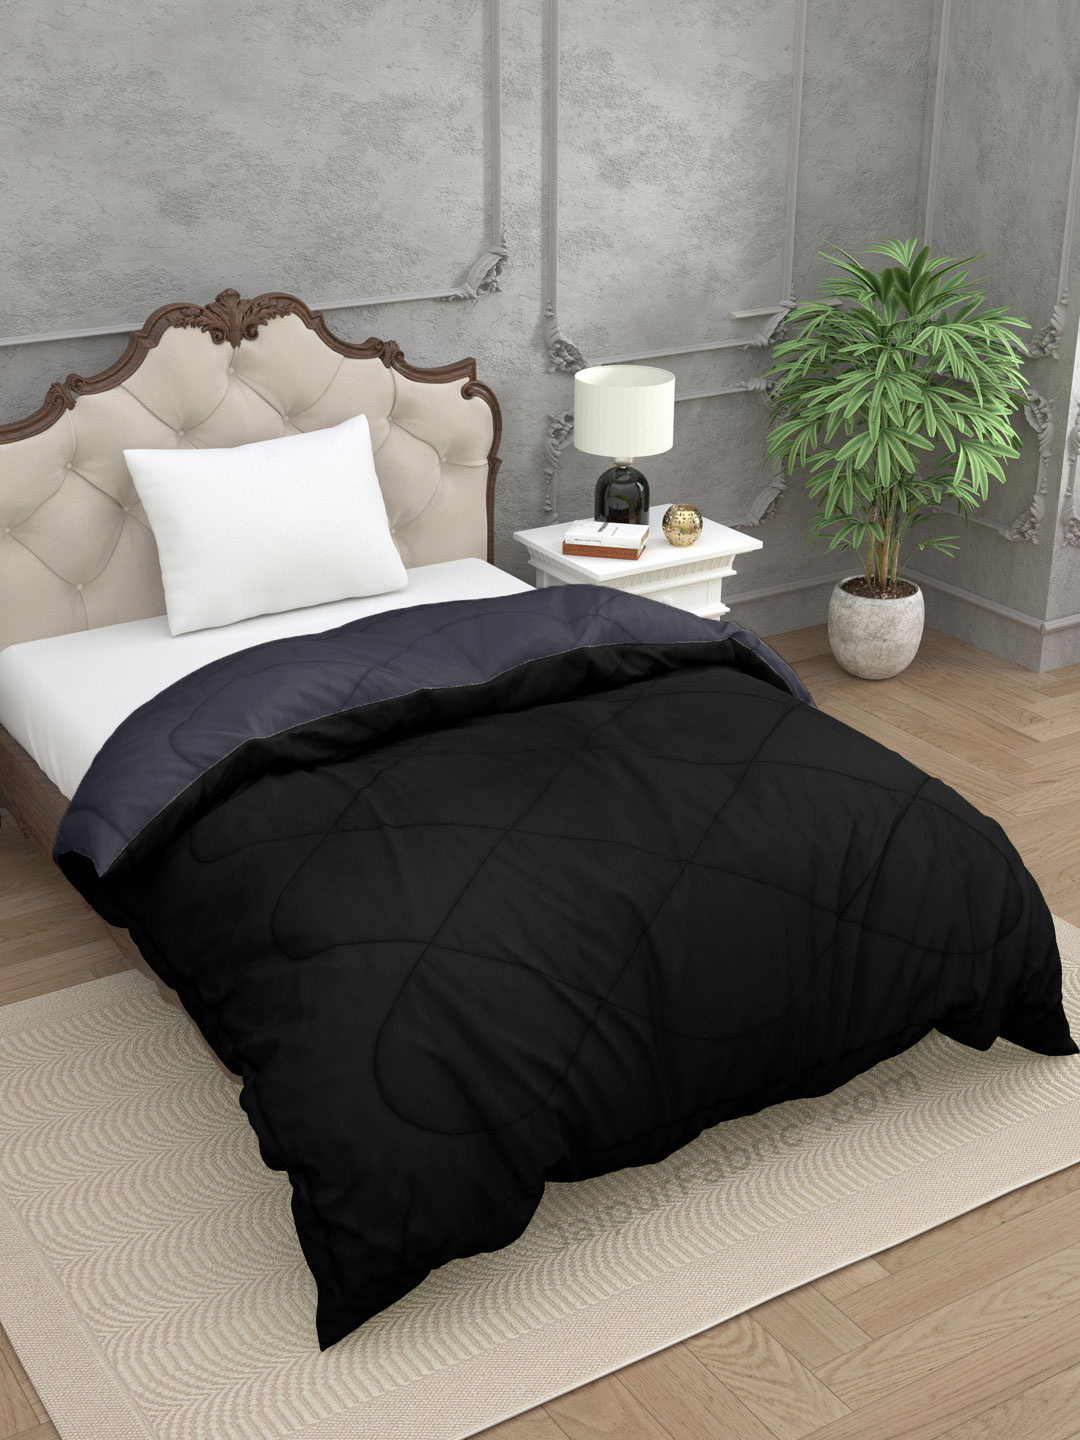 Black Dark Grey Single Bed Comforter